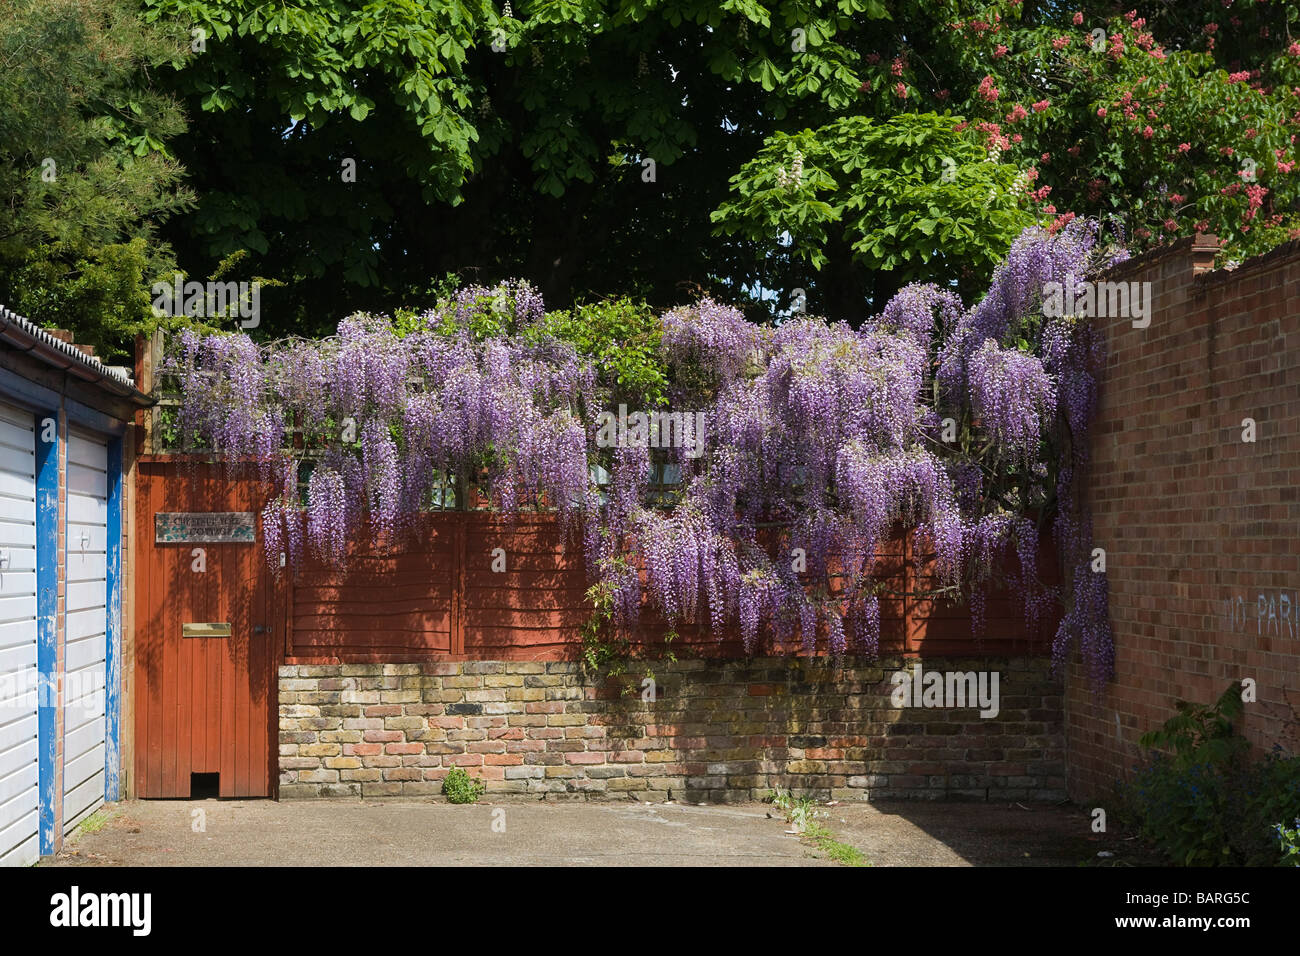 Wisteria blooms cover garden wall Stock Photo